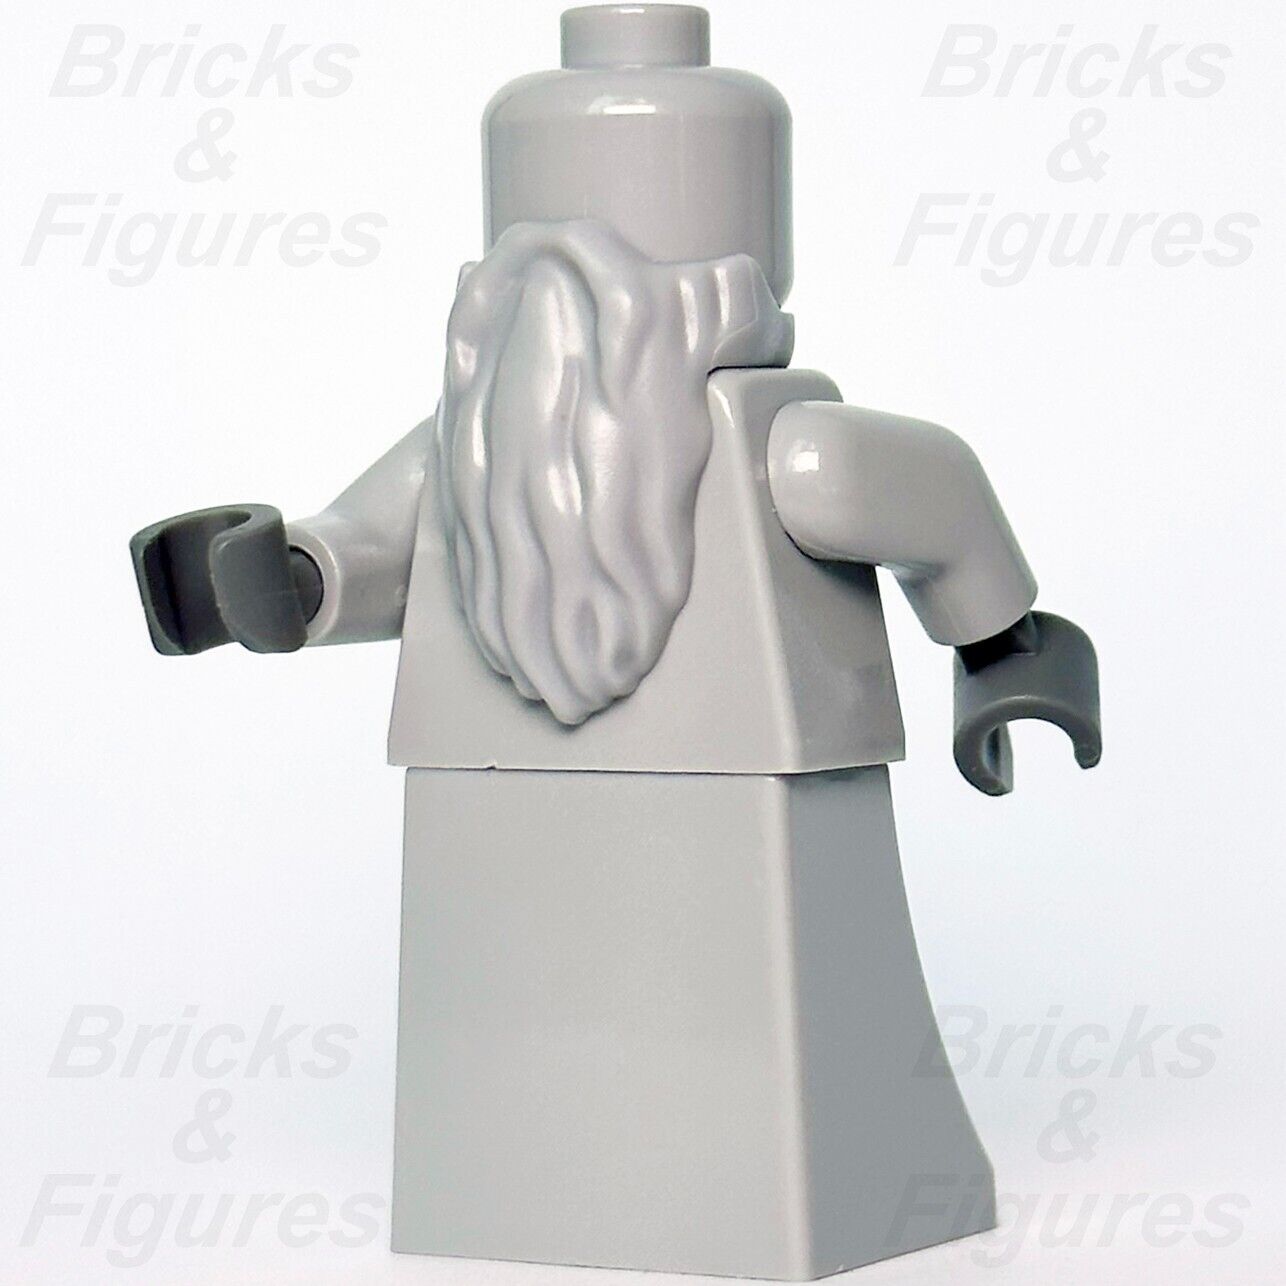 LEGO Harry Potter Wizard Hogwarts Statue Minifigure Sorcerer Stone 76395 hp298 - Bricks & Figures